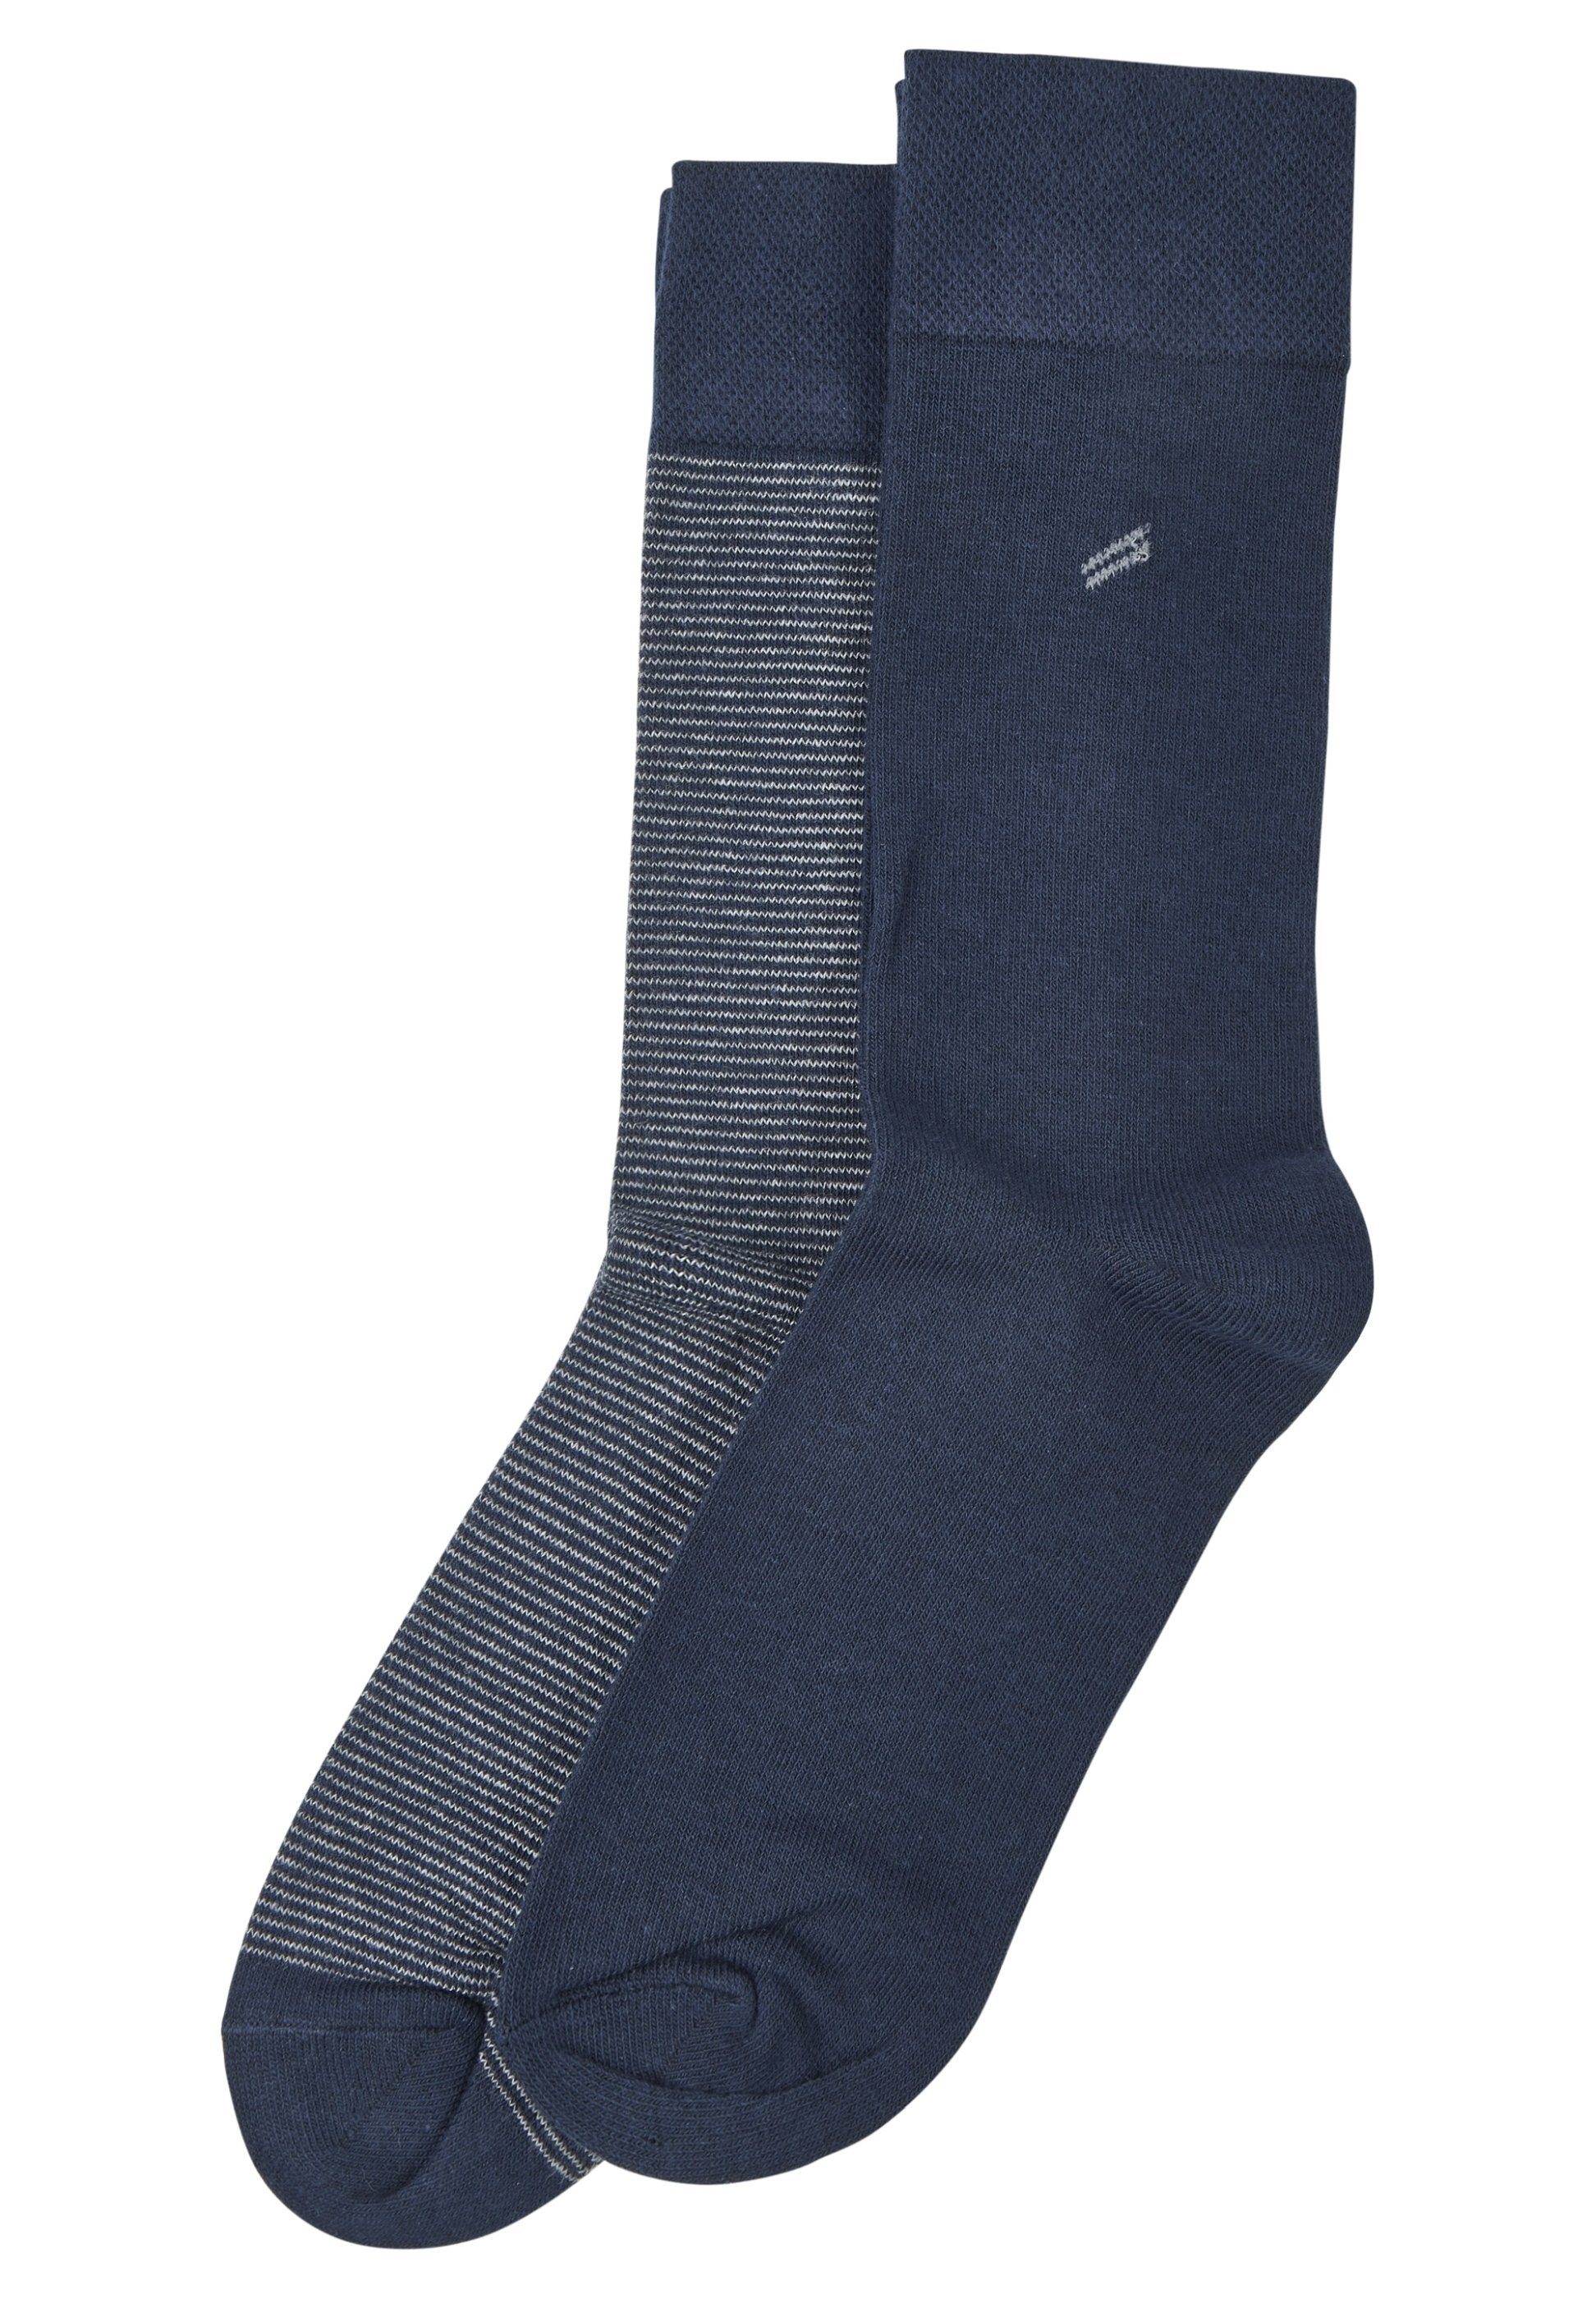 HECHTER PARIS Socken (2-Paar), Doppelpack Socken hochwertiger